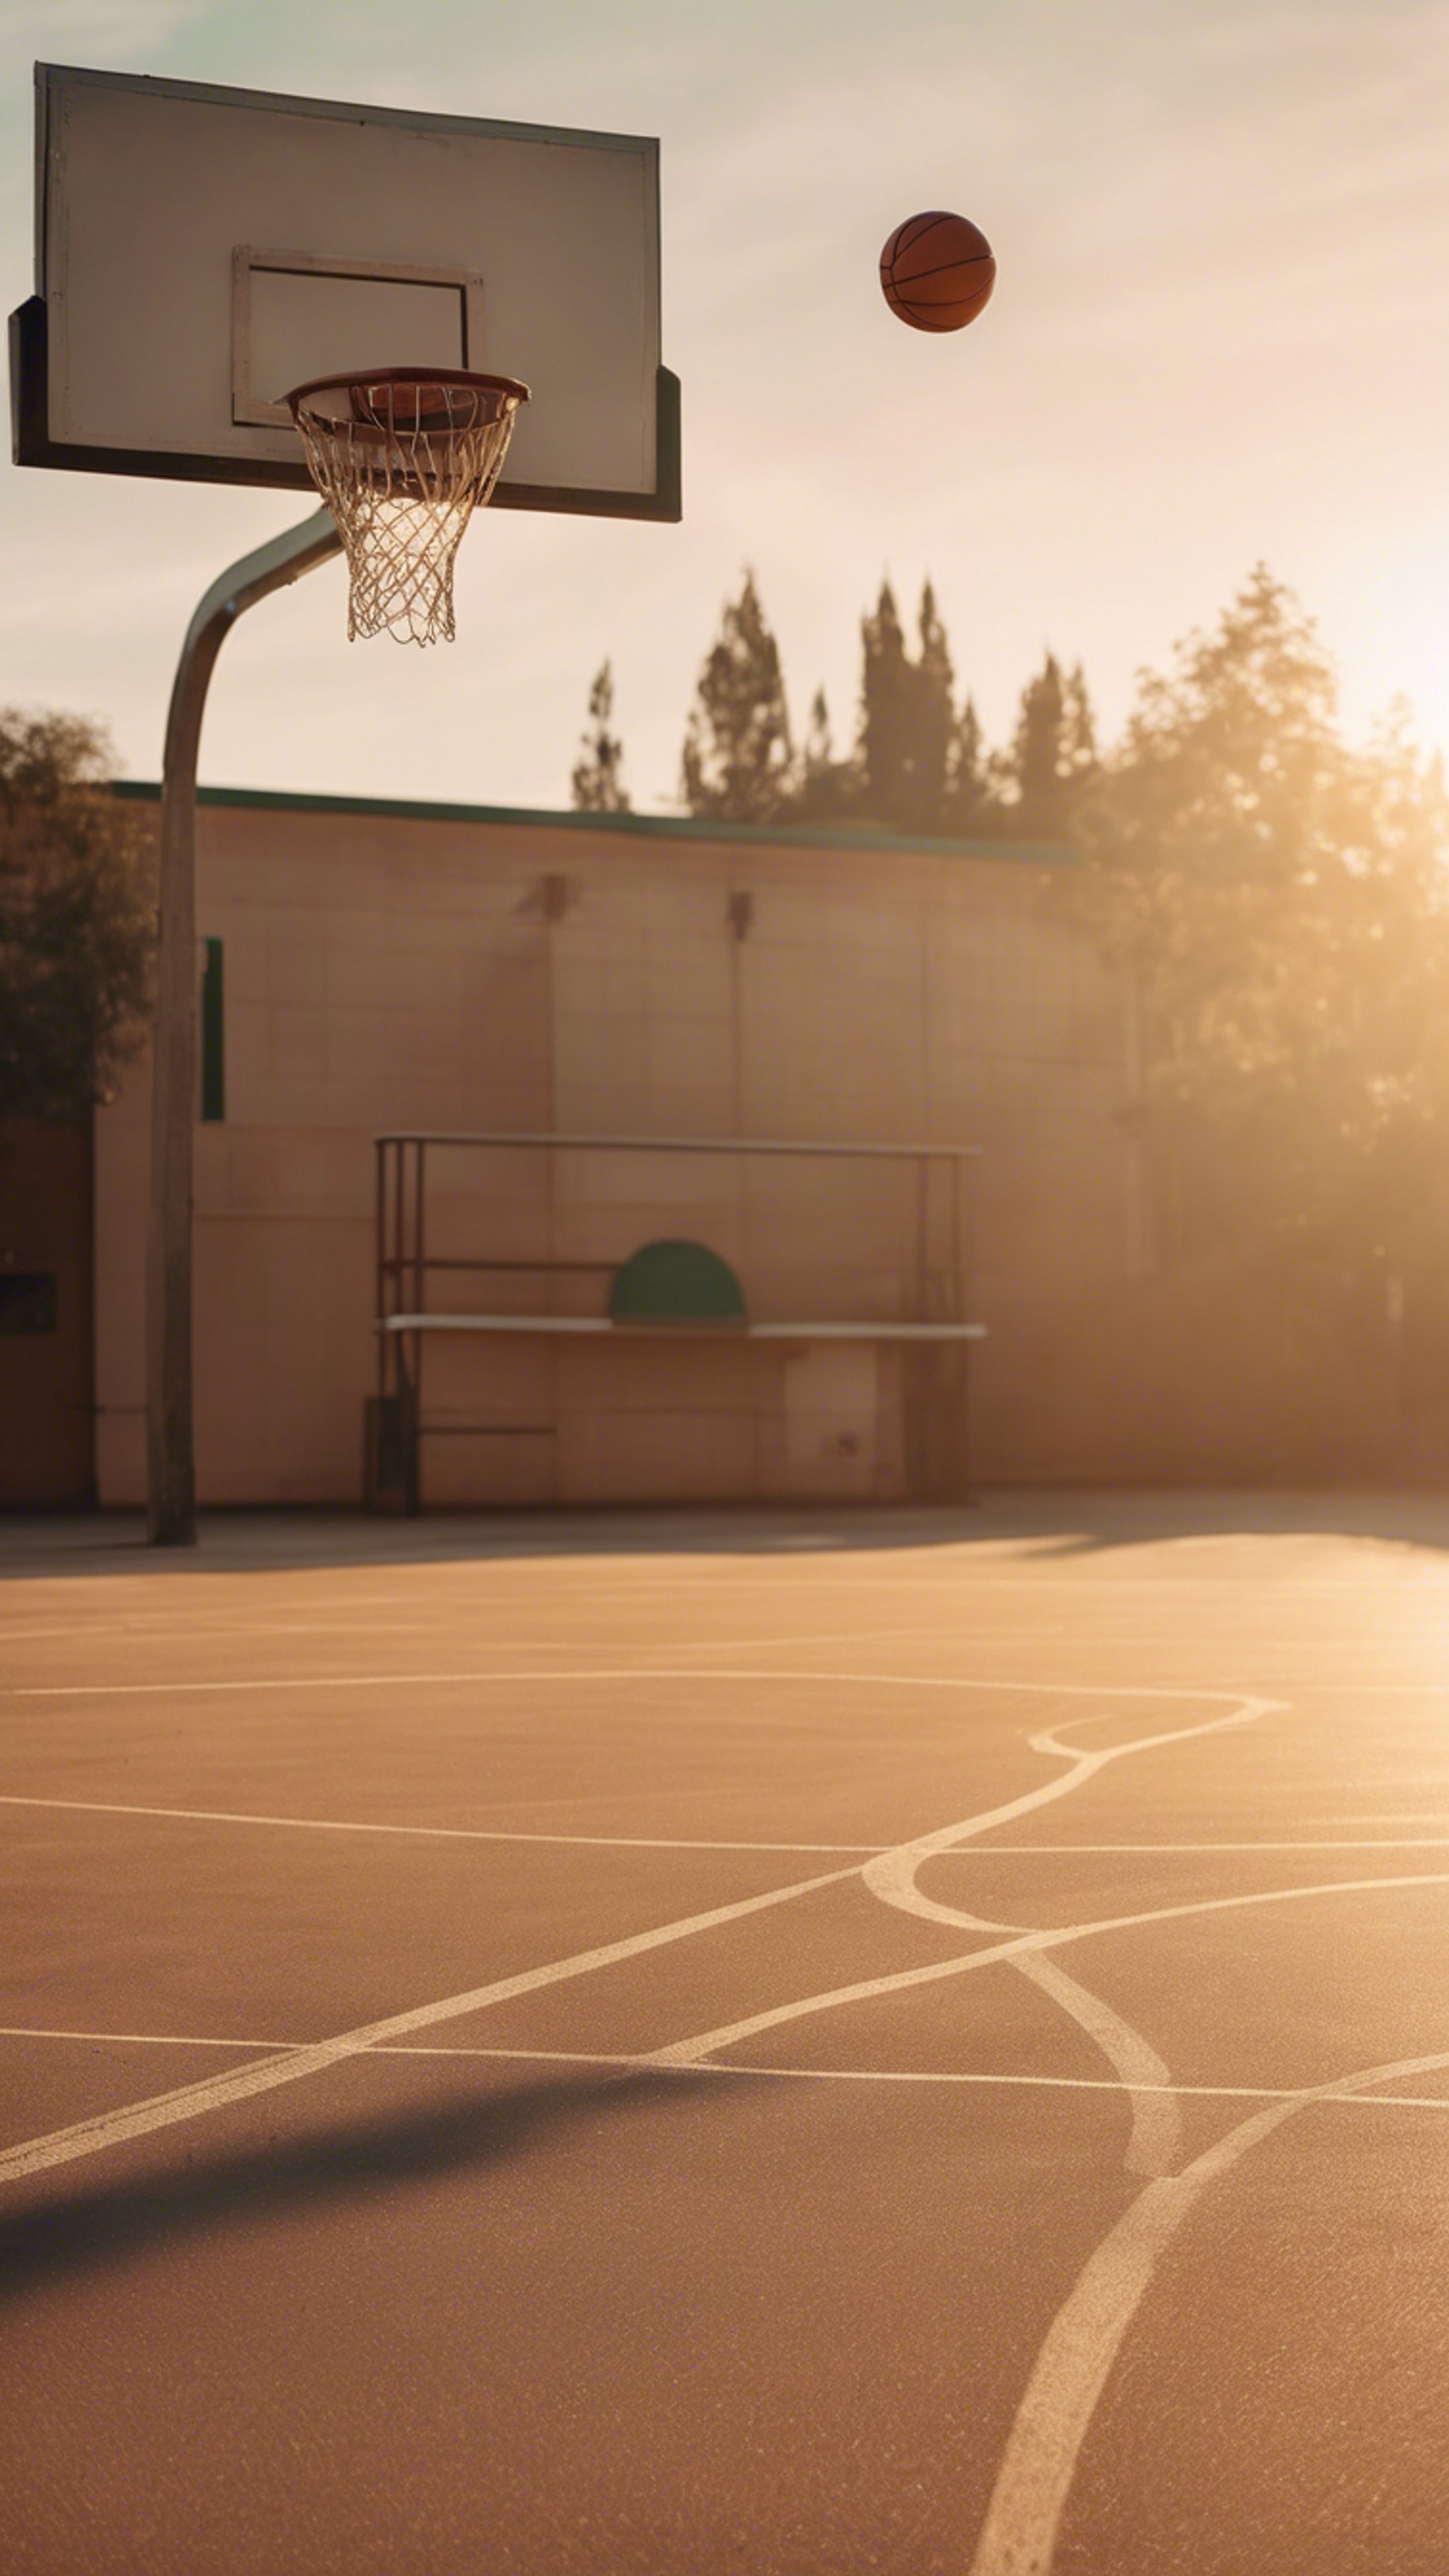 A deserted school’s basketball court in the pacific golden light of sunset. ورق الجدران[5d35315ab9de41dcbc38]